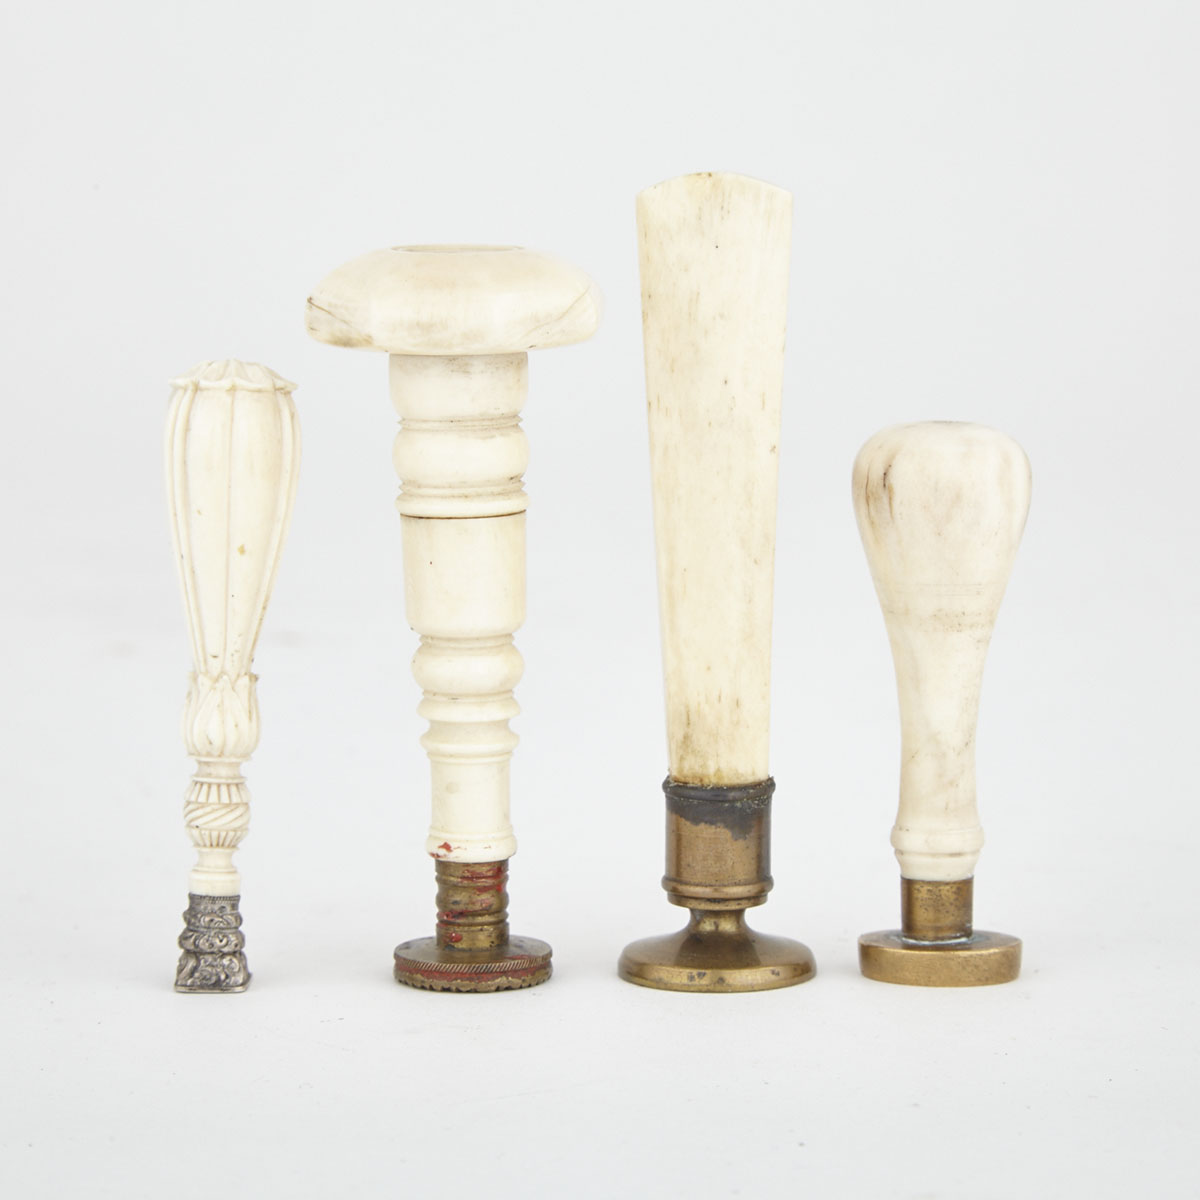 Four Victorian Bone or Ivory Handled Desk Seals, 19th century